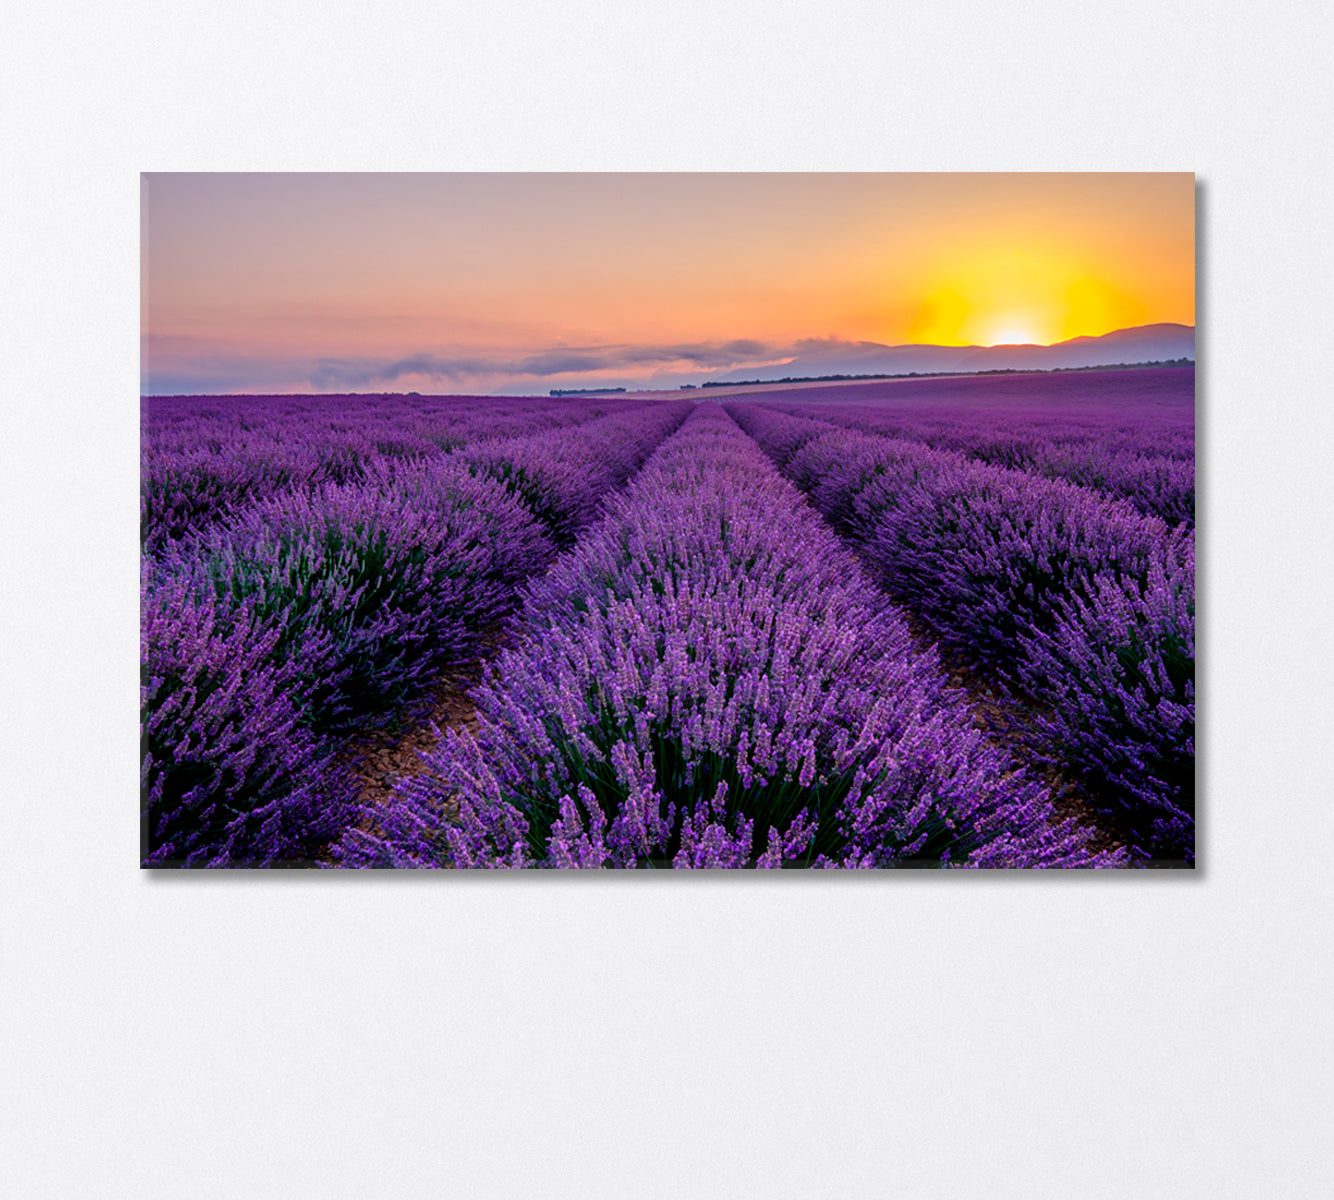 Sunrise in the Lavender Field Canvas Print-Canvas Print-CetArt-1 Panel-24x16 inches-CetArt